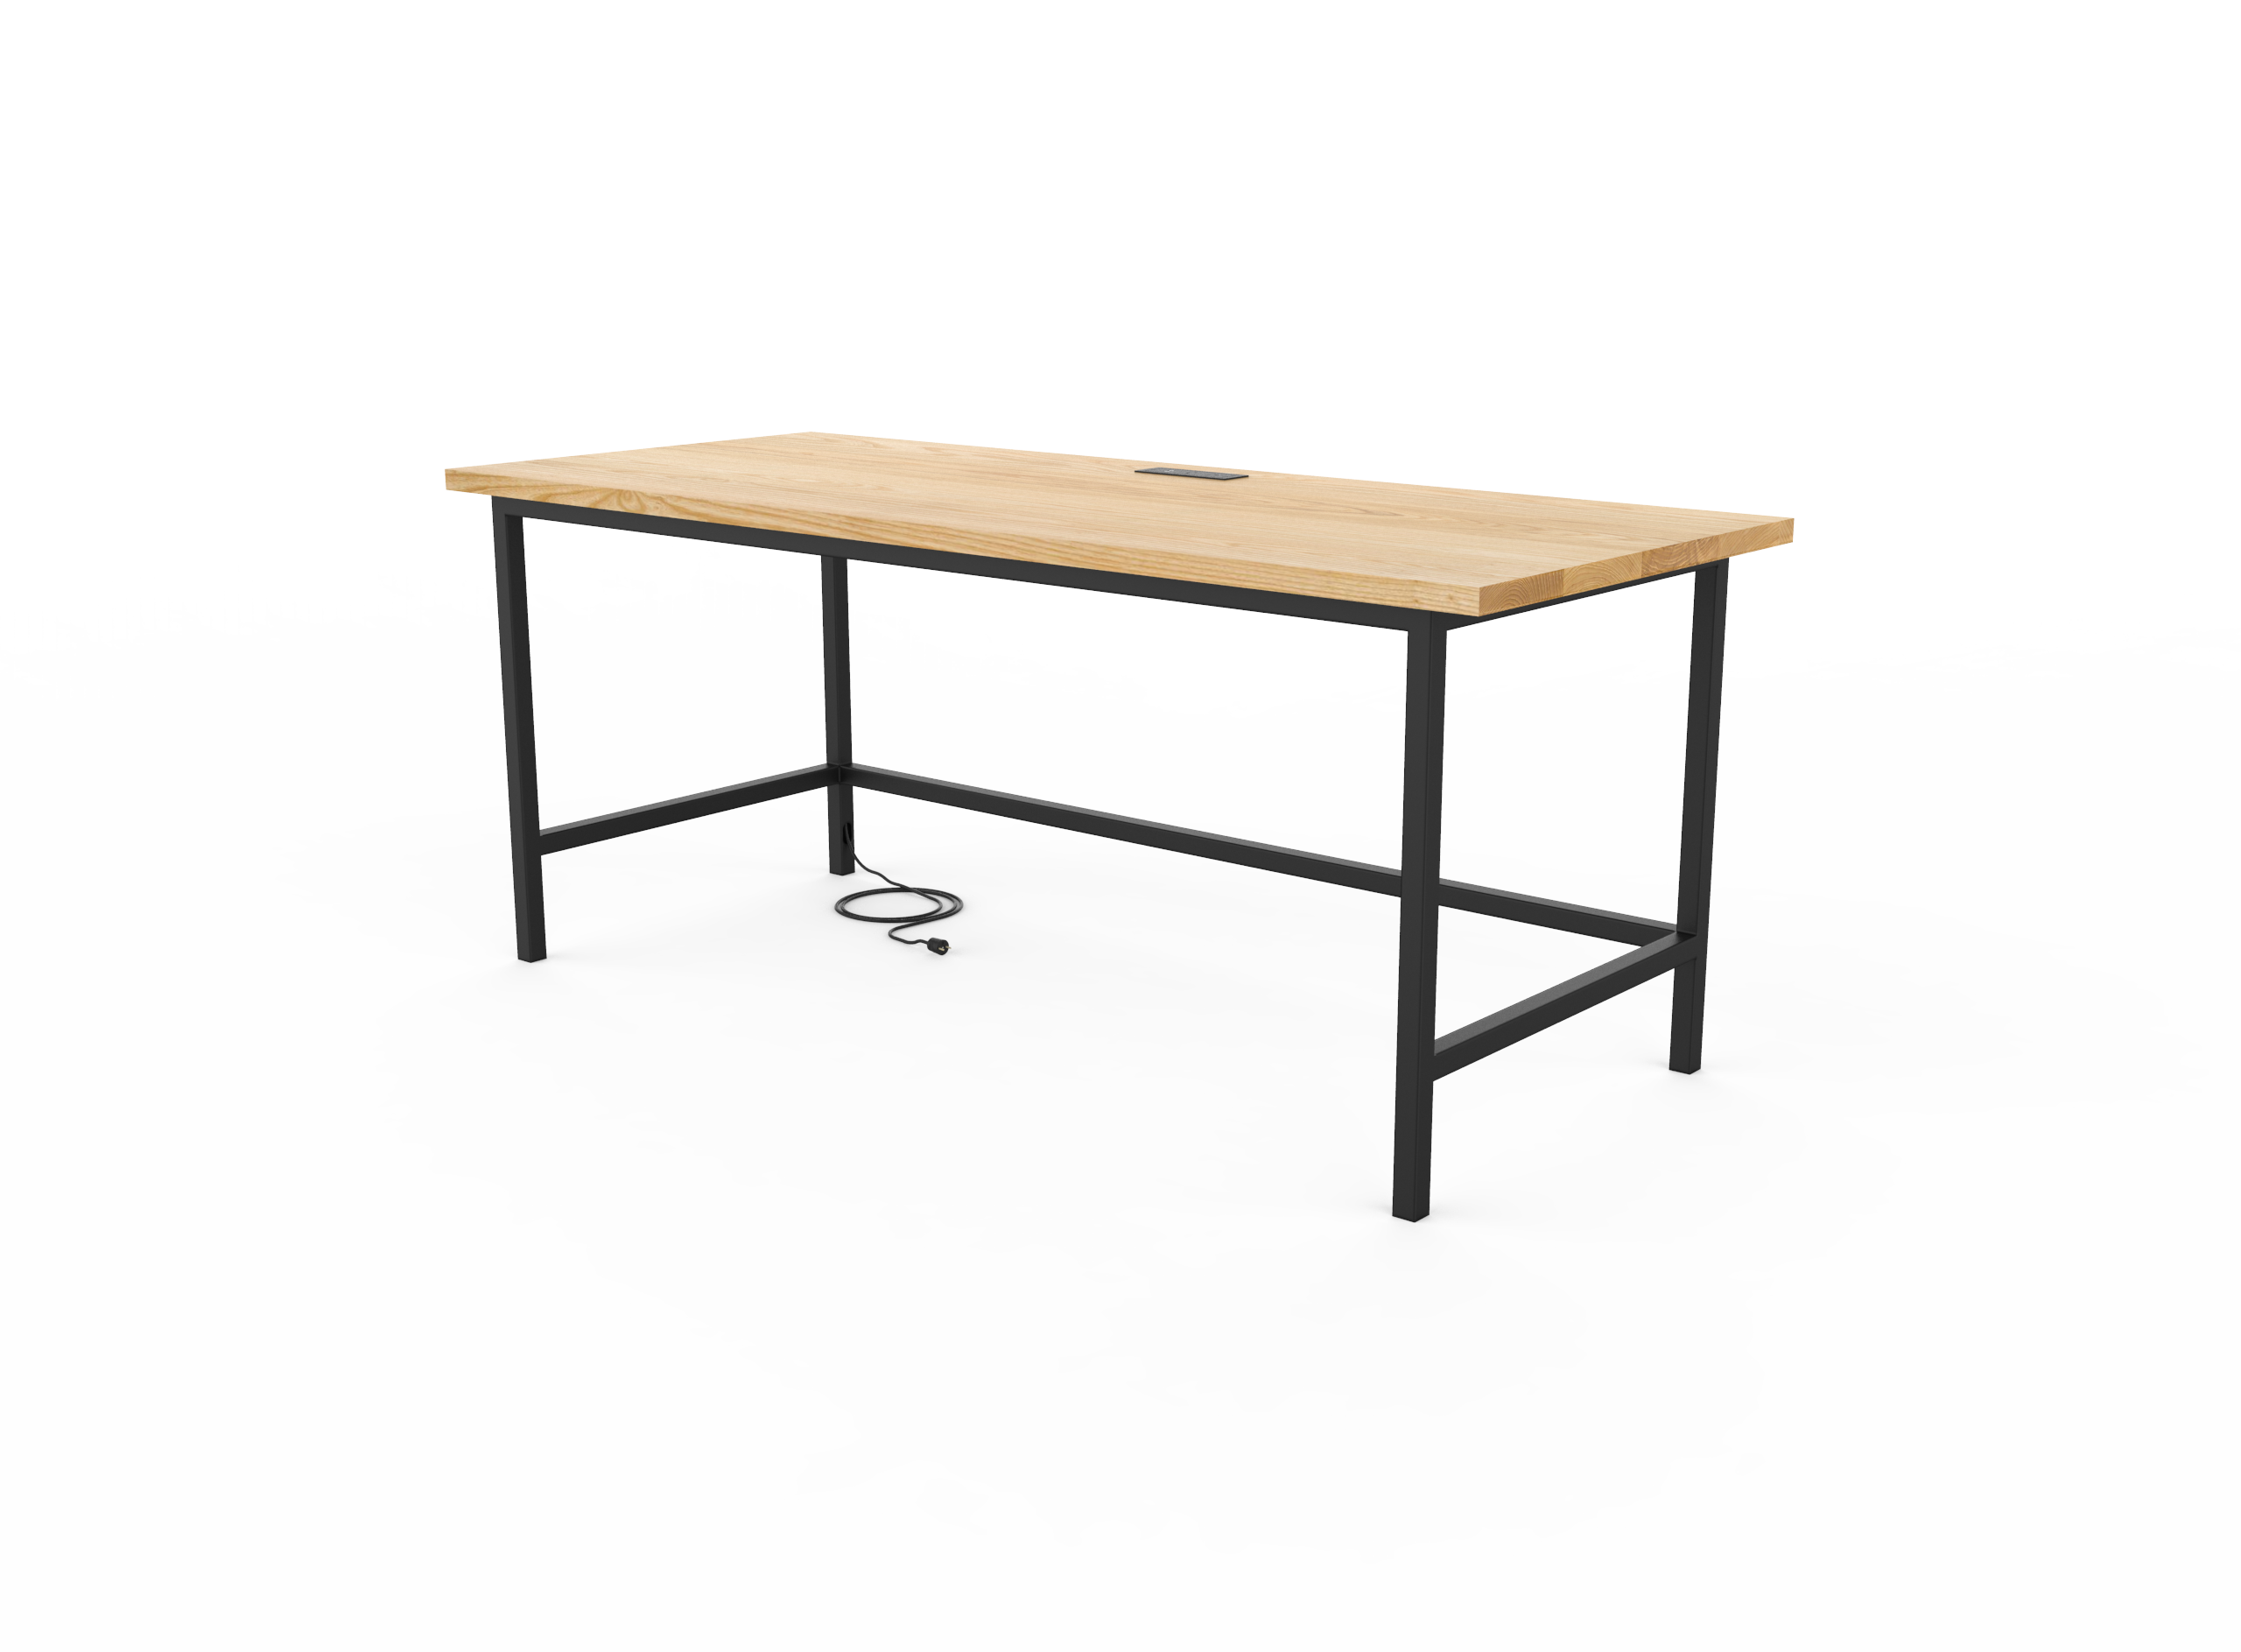 Vermont Farm Table Custom Wood Desk H150 30x72 003 Ash 